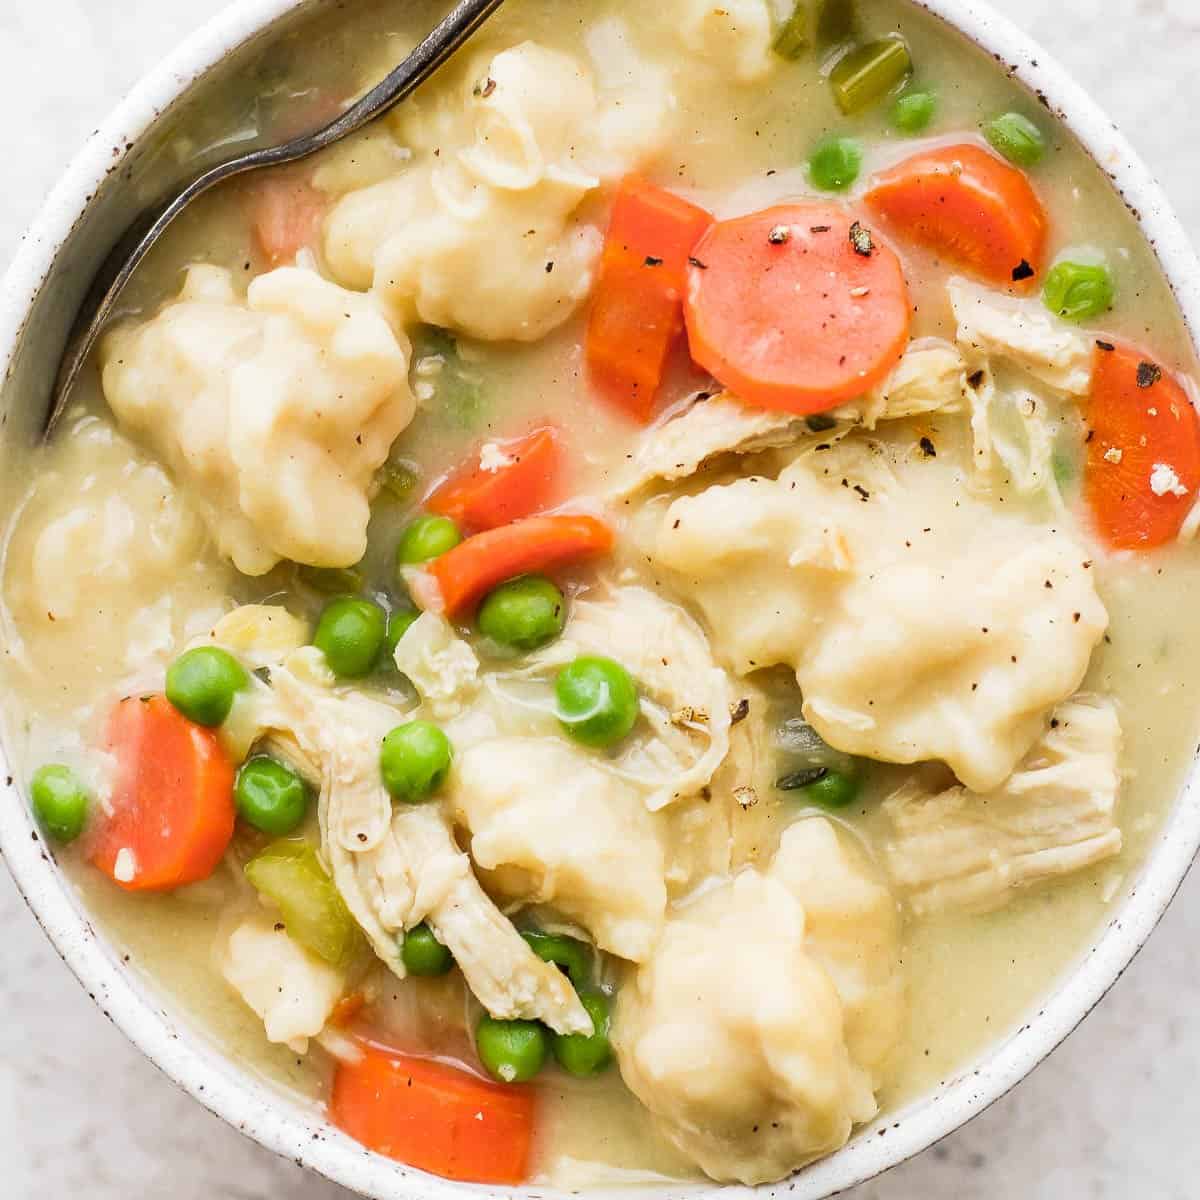 Chicken and dumpling soup recipe.